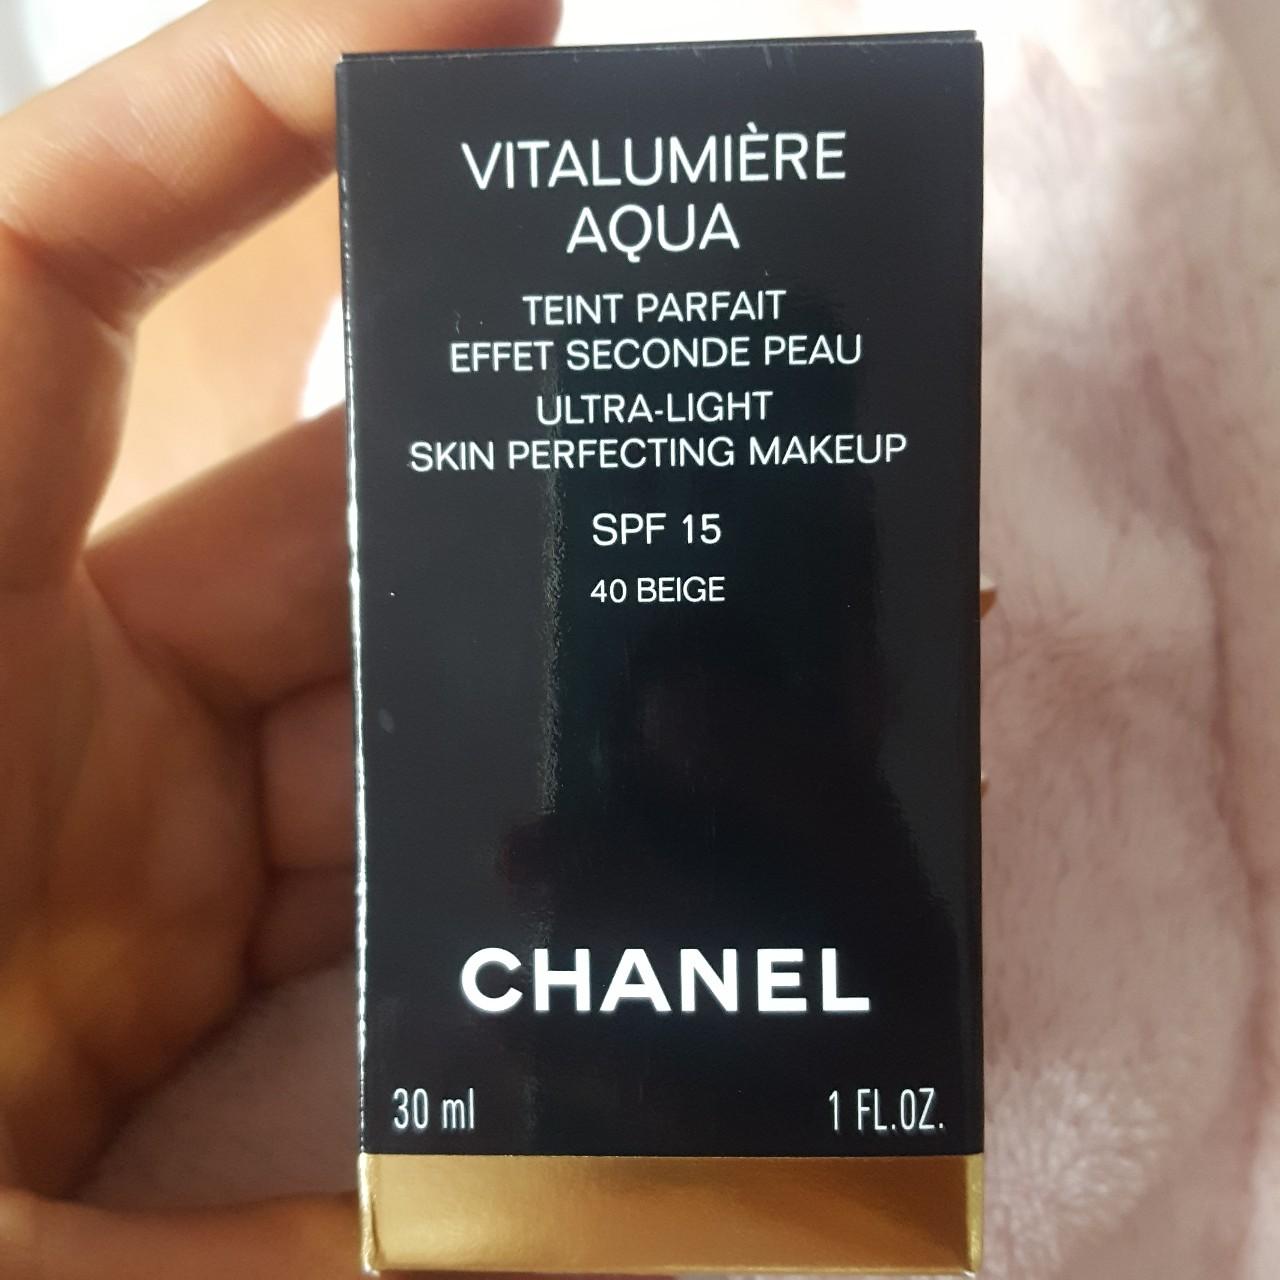 Chanel Vitalumiere Aqua 30ml in 40 Beige . Too light - Depop